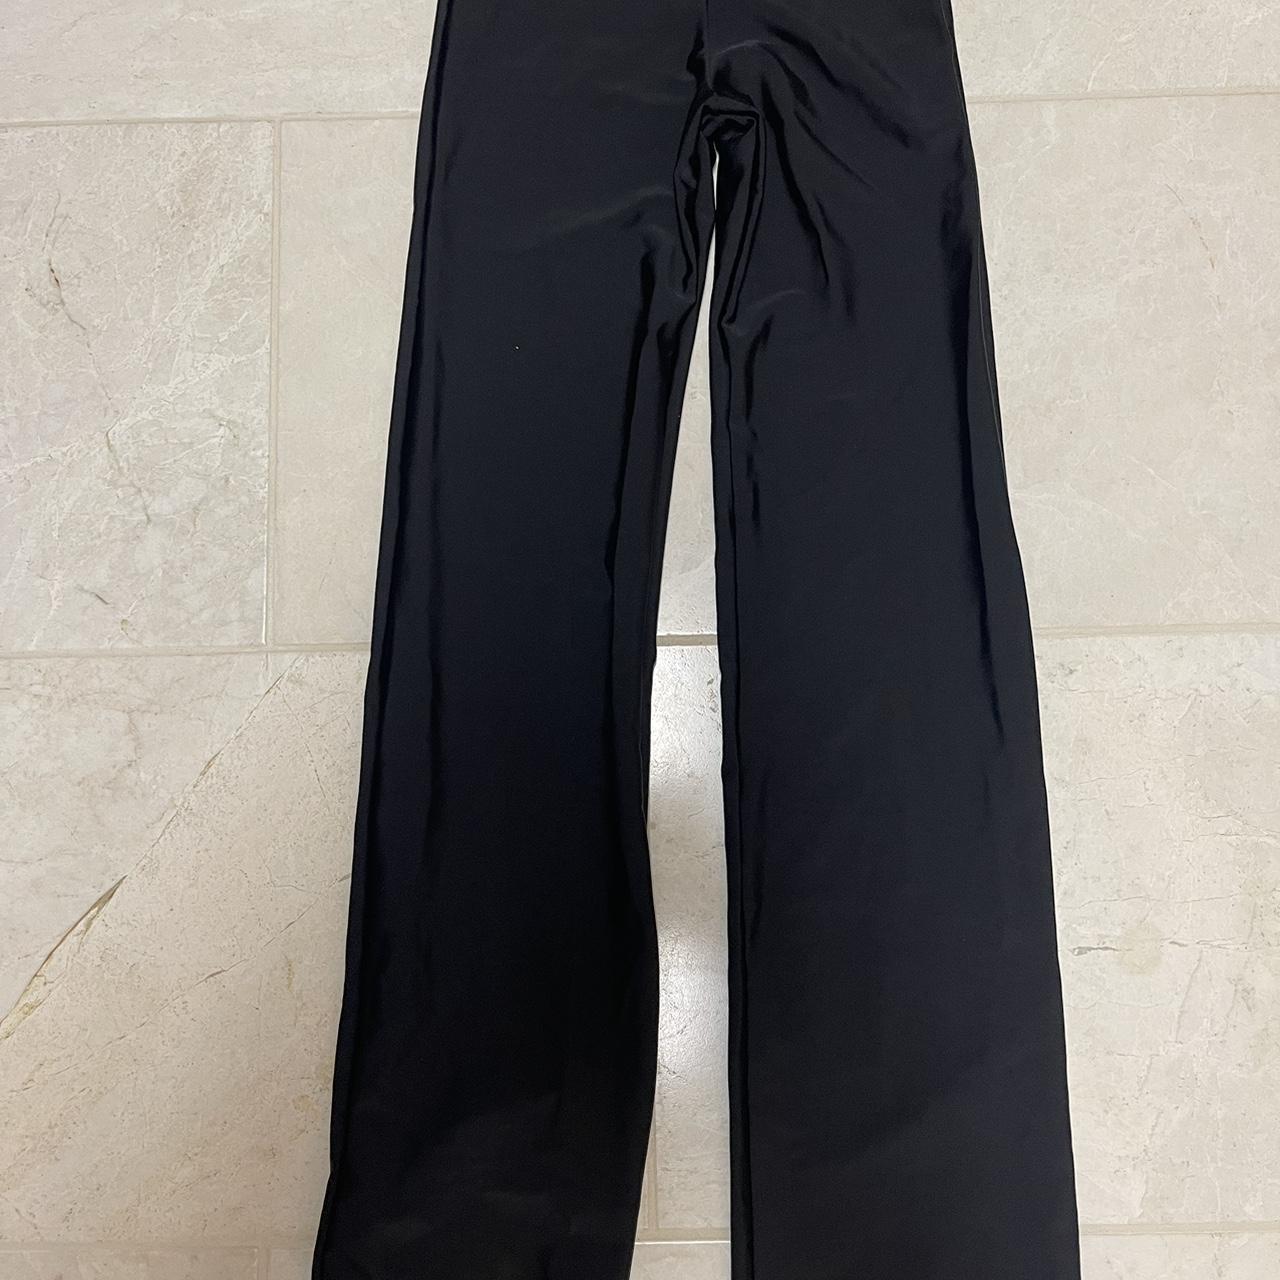 shosho leggings fits s/m patterned black/white, - Depop